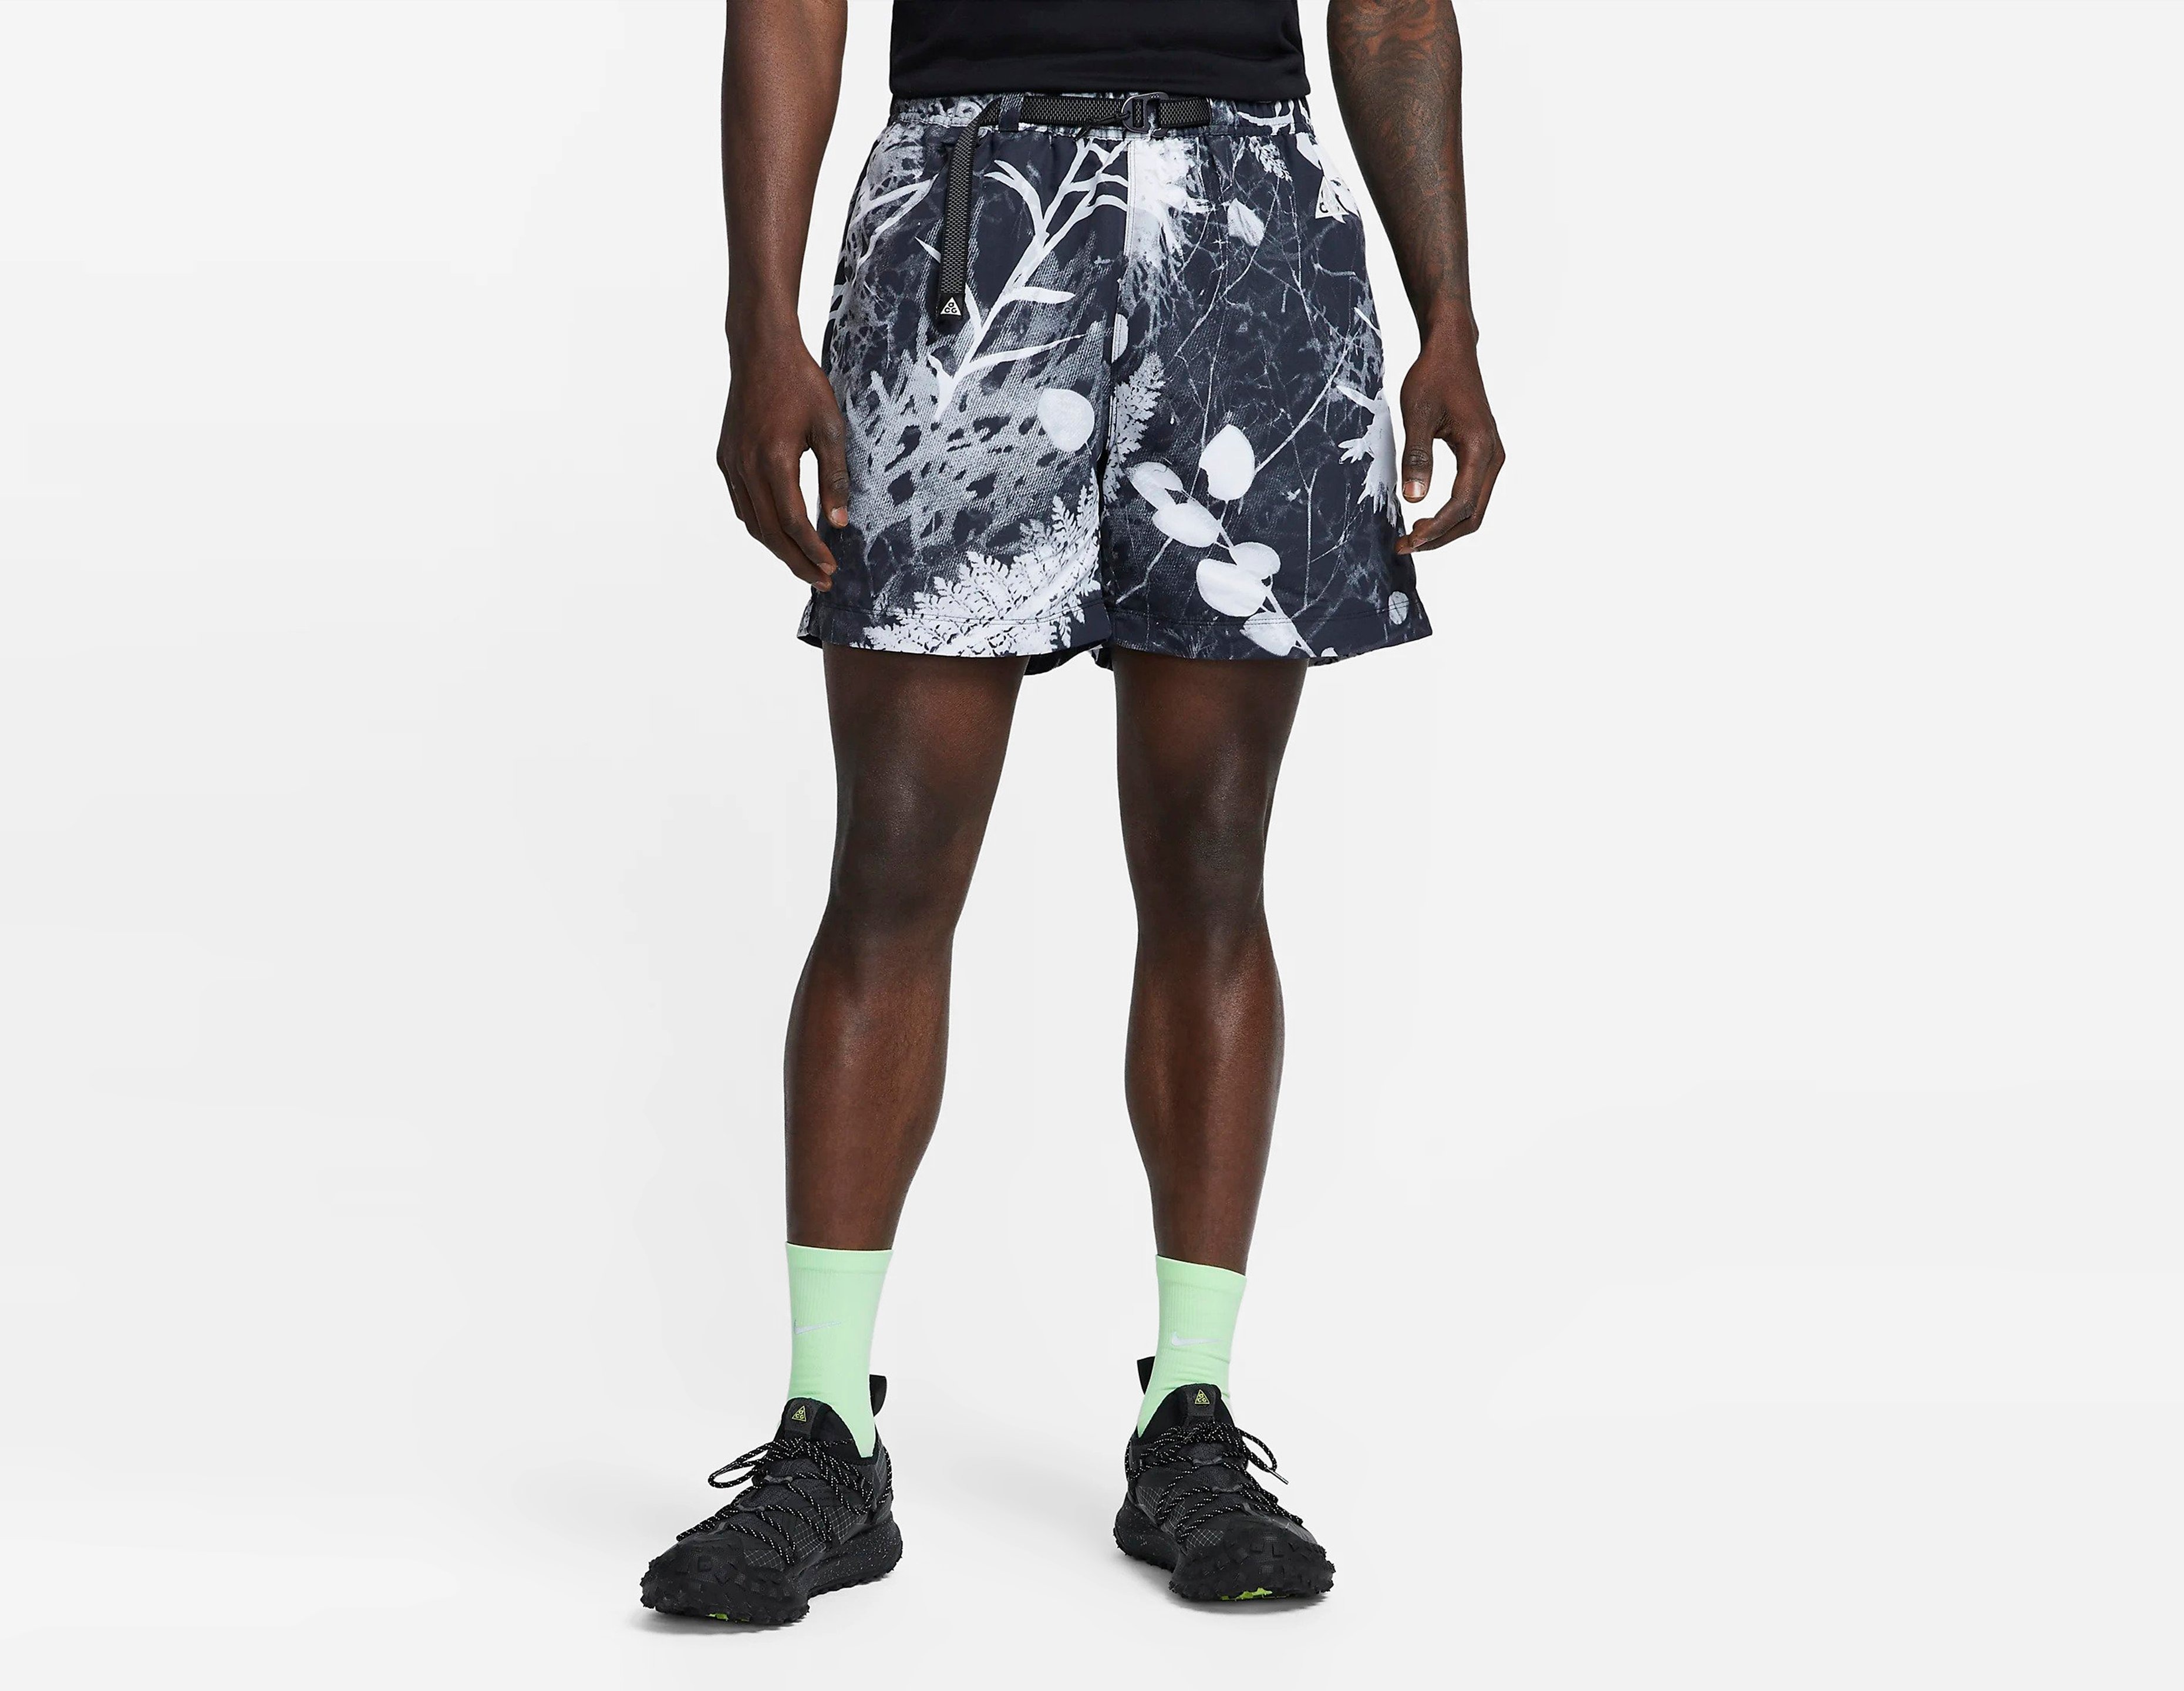 Jogging Nike Homme Coton United Kingdom, SAVE 33%, 48% OFF